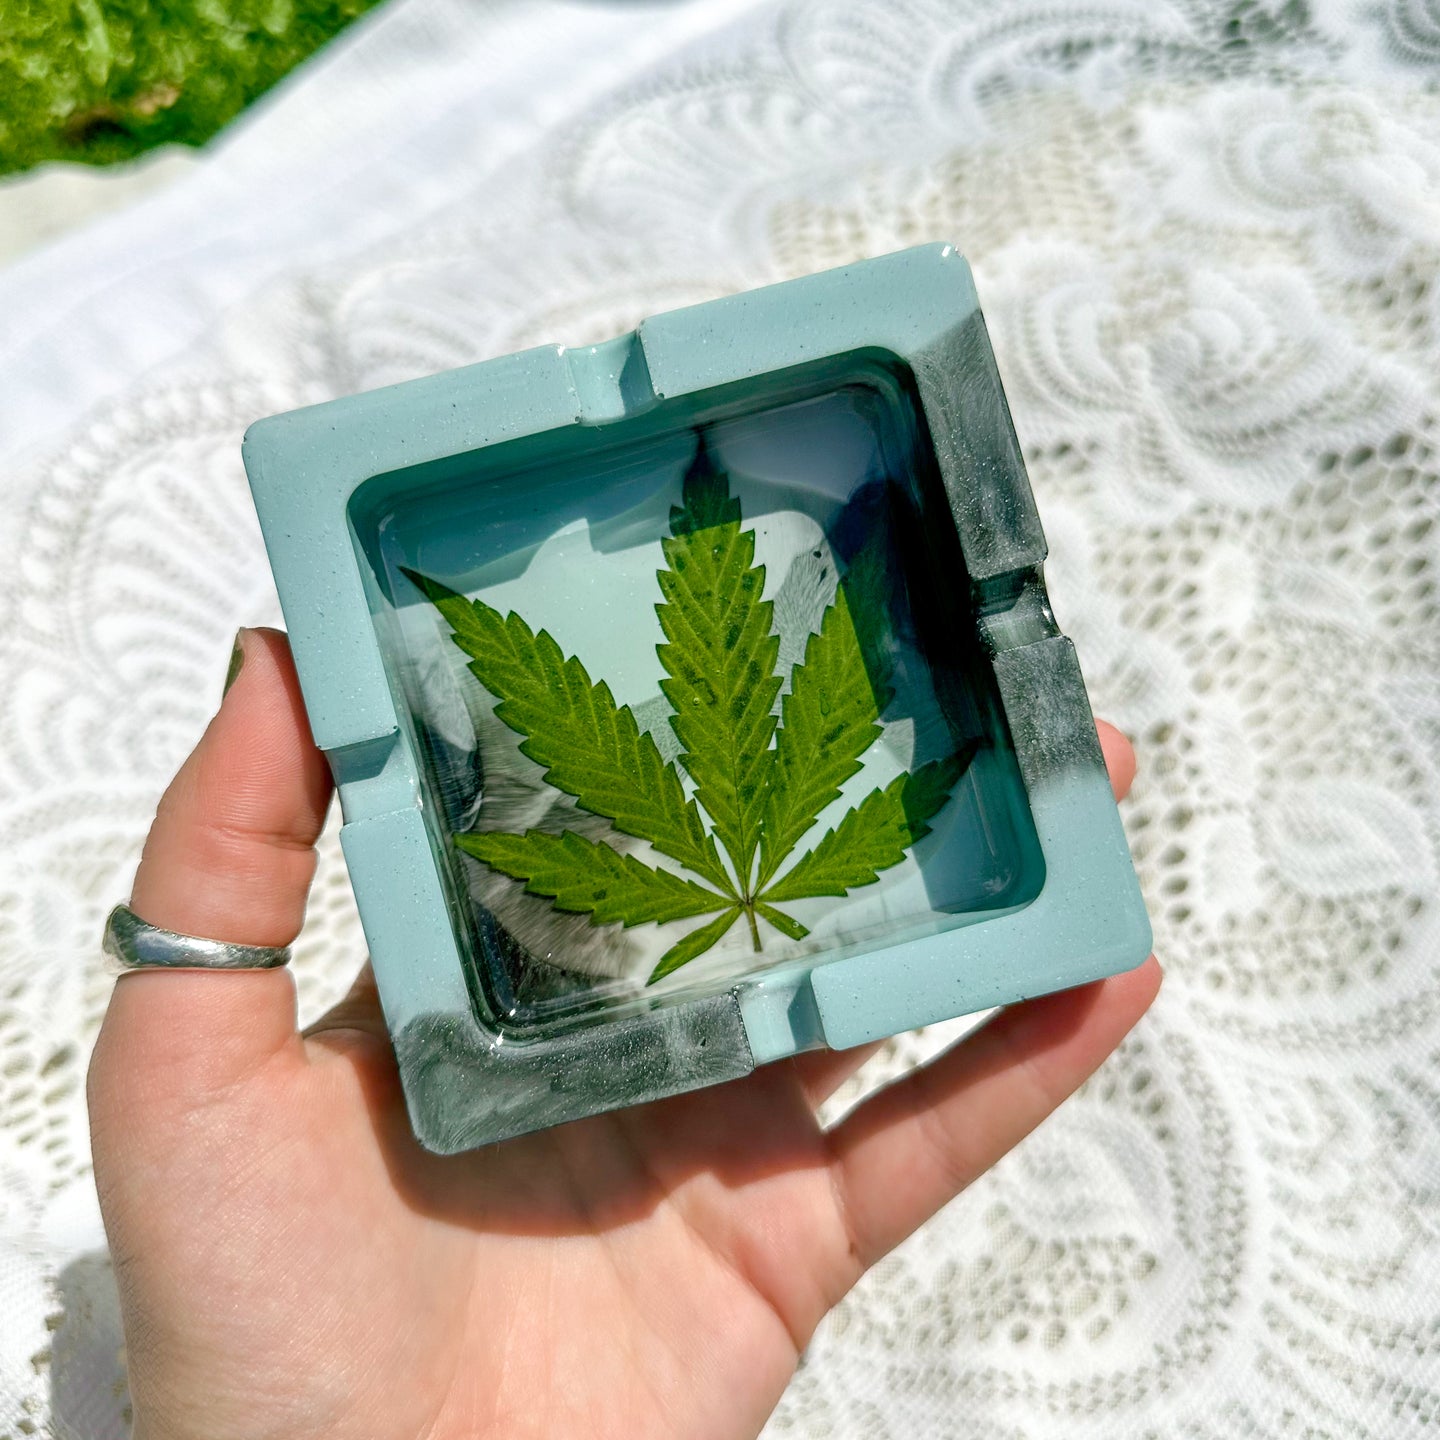 Green marble cannabis leaf square ash tray